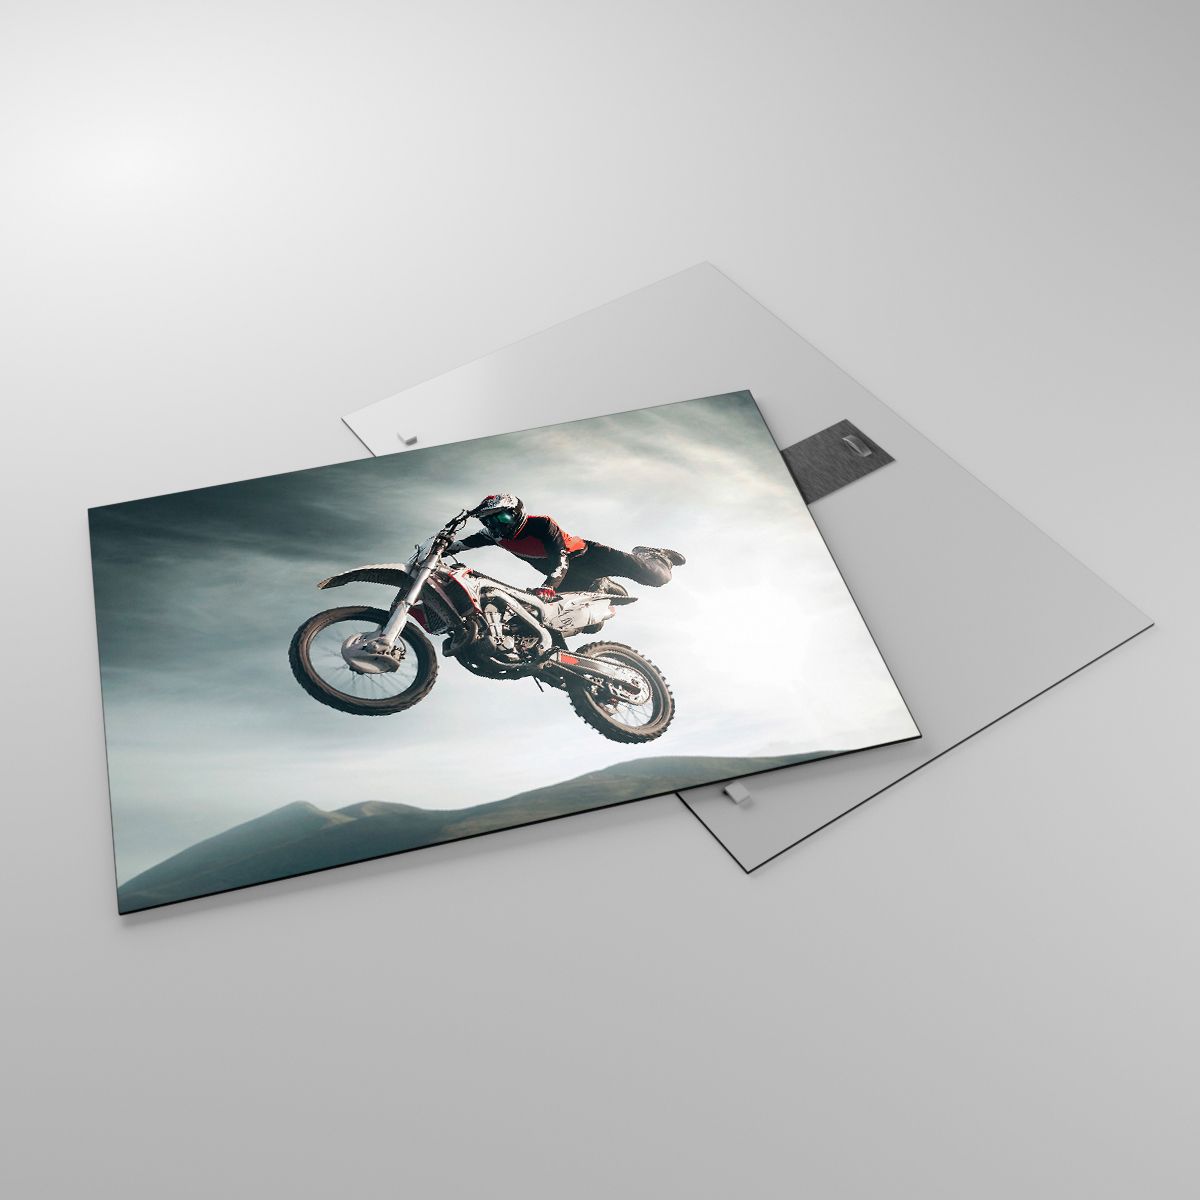 Glasbild Moto-Cross, Glasbild Motorrad, Glasbild Motorradfahrer, Glasbild Motocross-Wettbewerb, Glasbild Sport